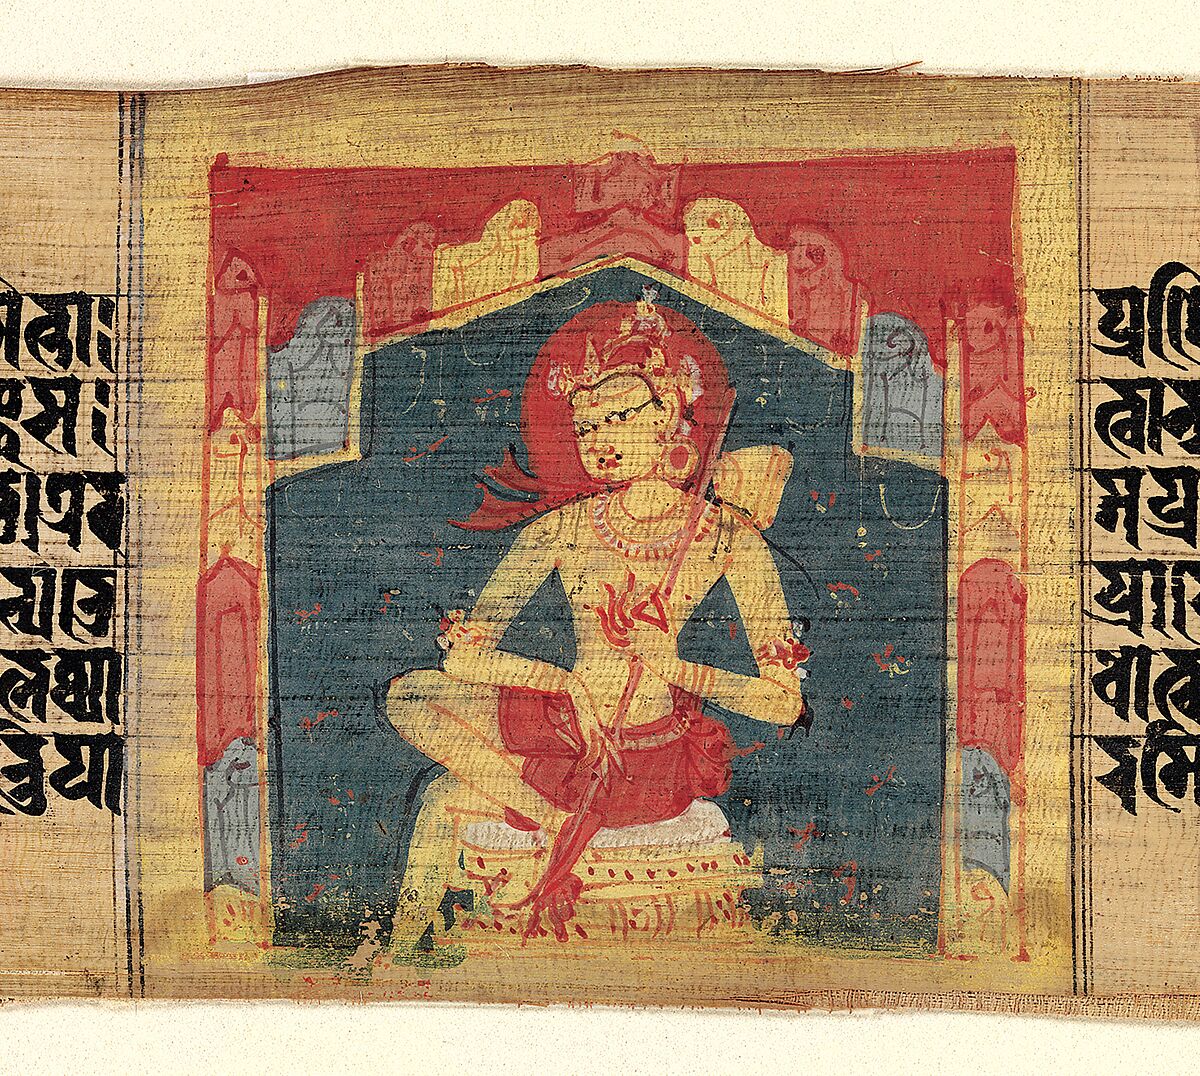 Bodhisattva in a Mountain Grotto, Playing a Stringed Instrument (Vina), Leaf from a Dispersed Pancavimsatisahasrika Prajnapramita Manuscript, Opaque watercolor on palm leaf, India (Bengal) or Bangladesh